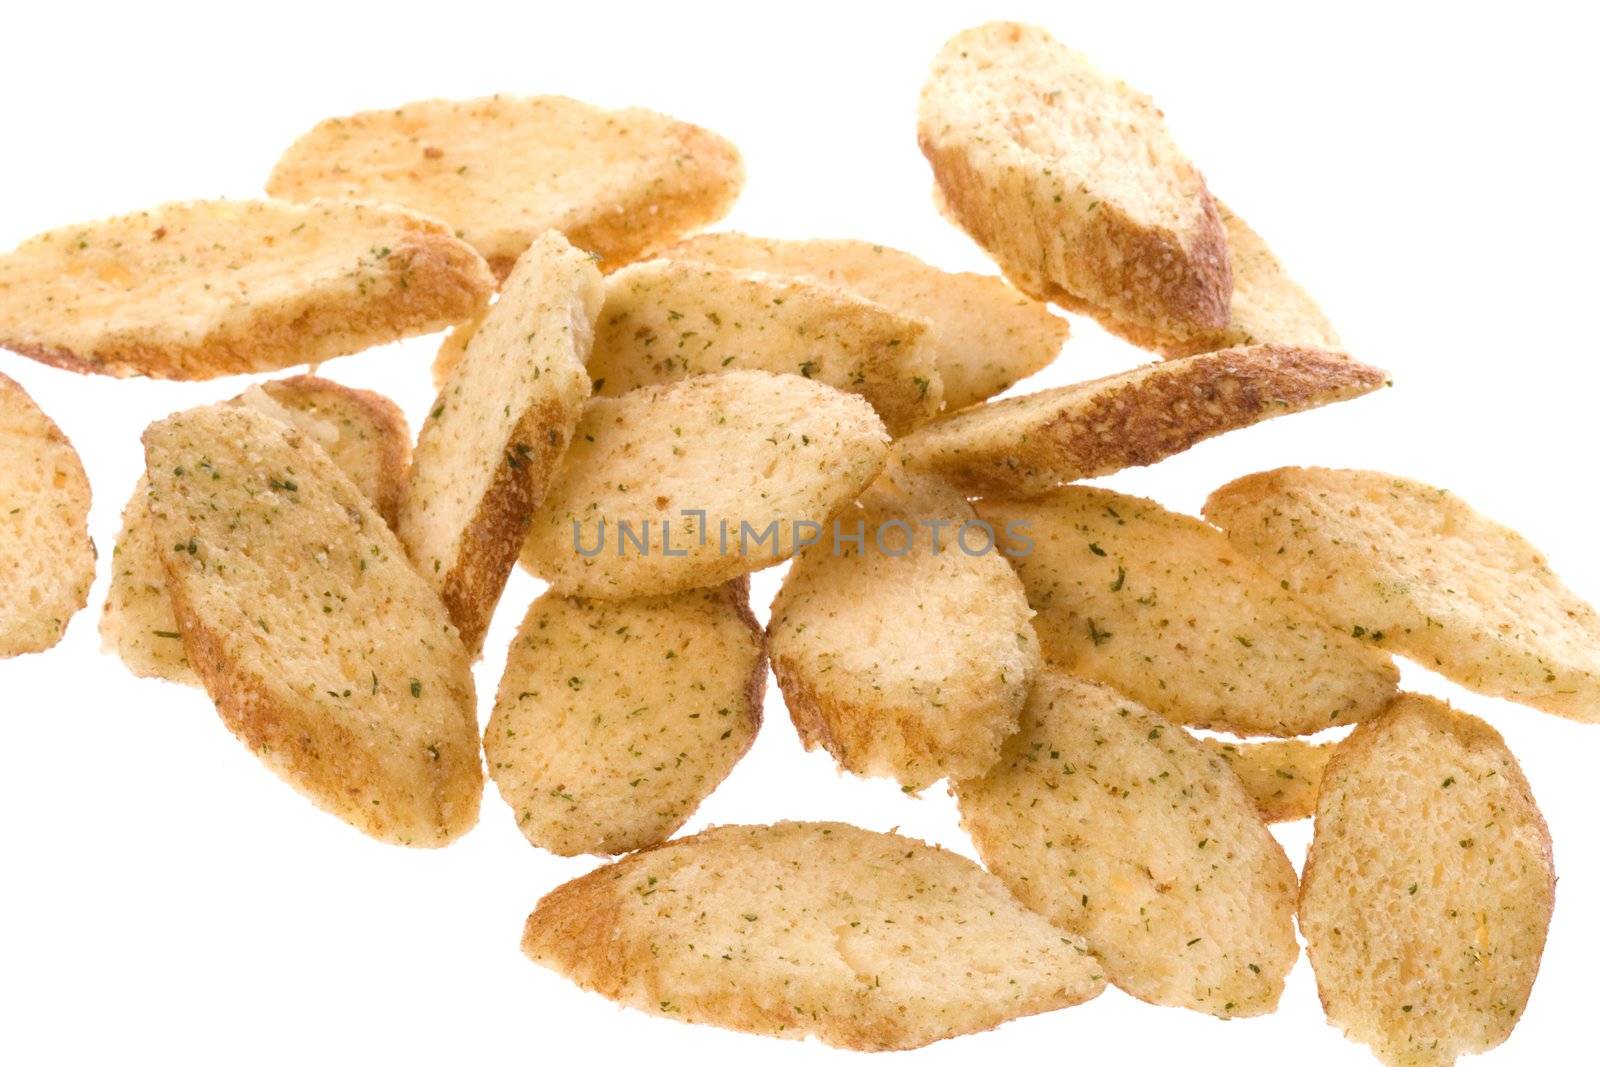 Isolated macro image of garlic toasts.